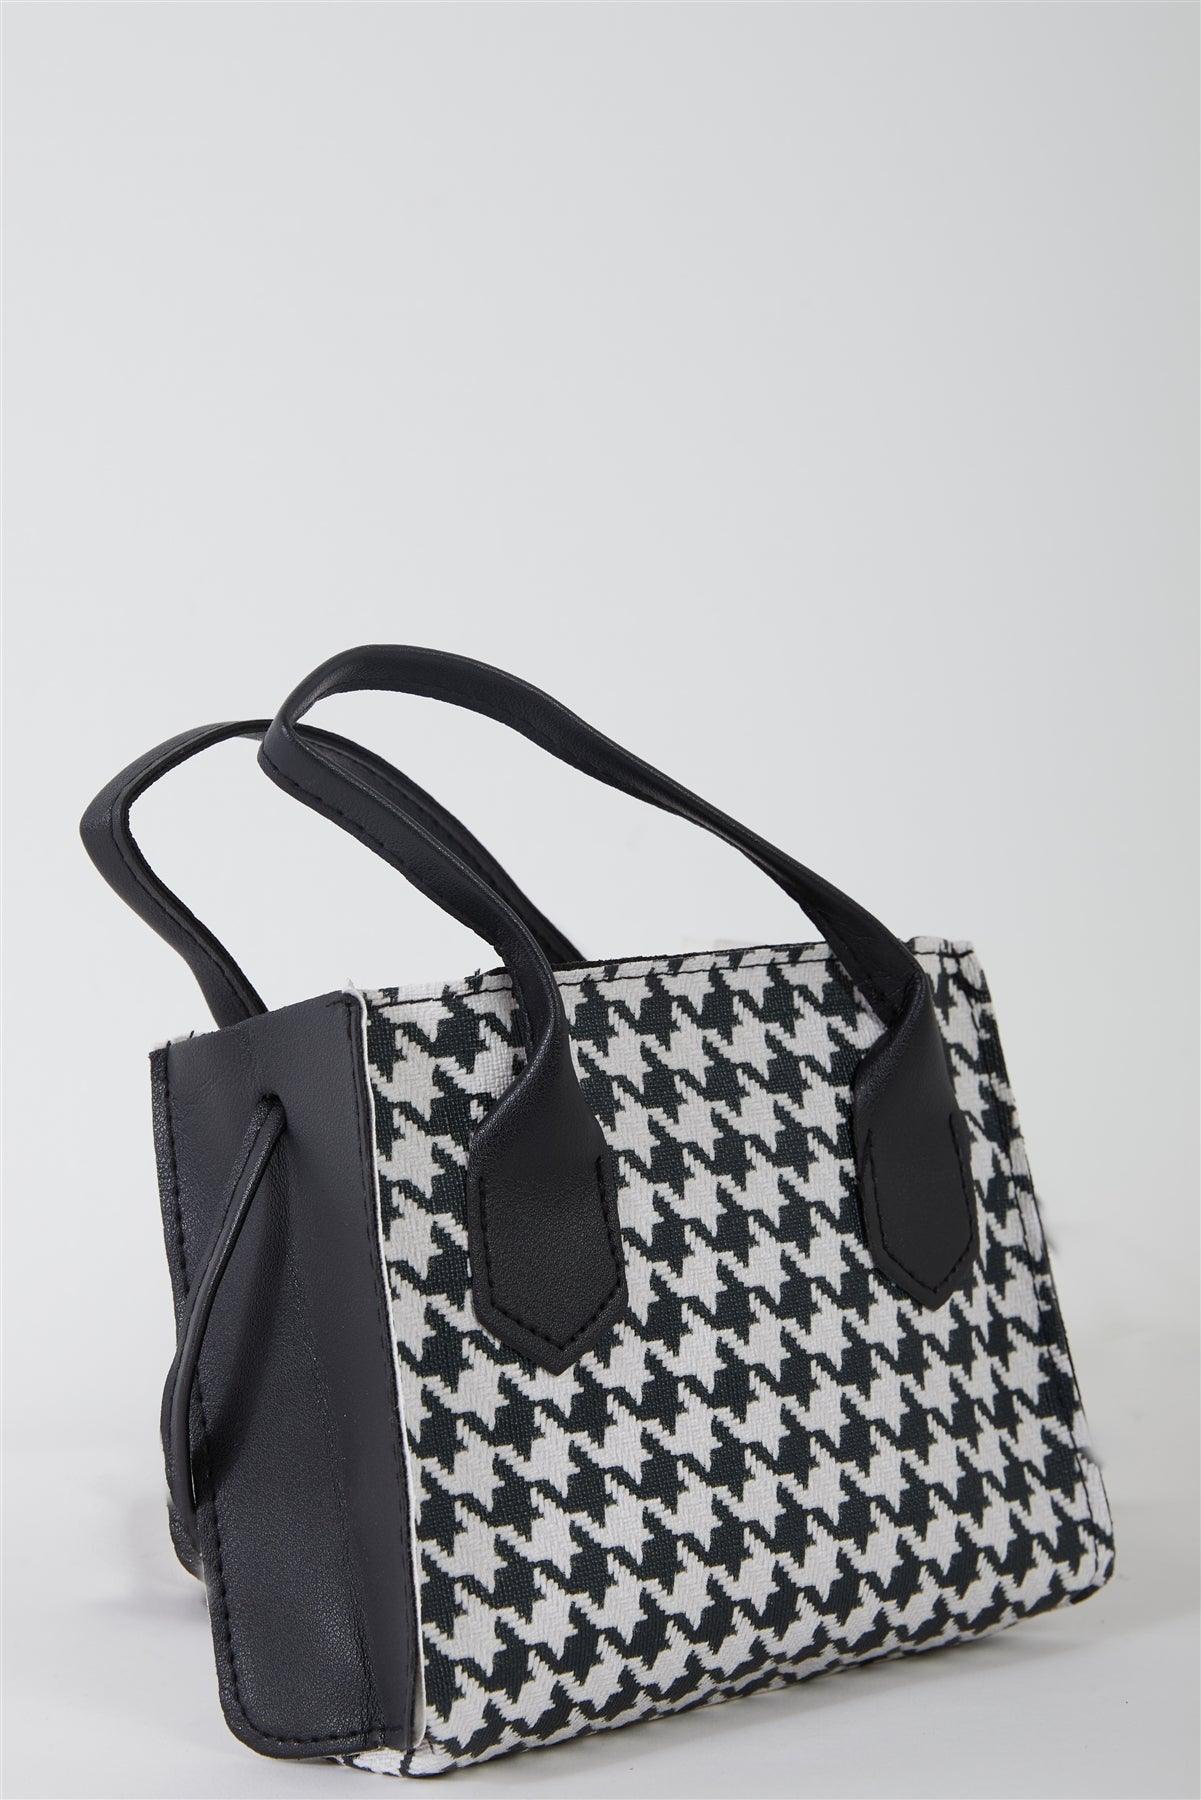 Black & White Houndstooth Print Two Handles Small Handbag /3 Bags